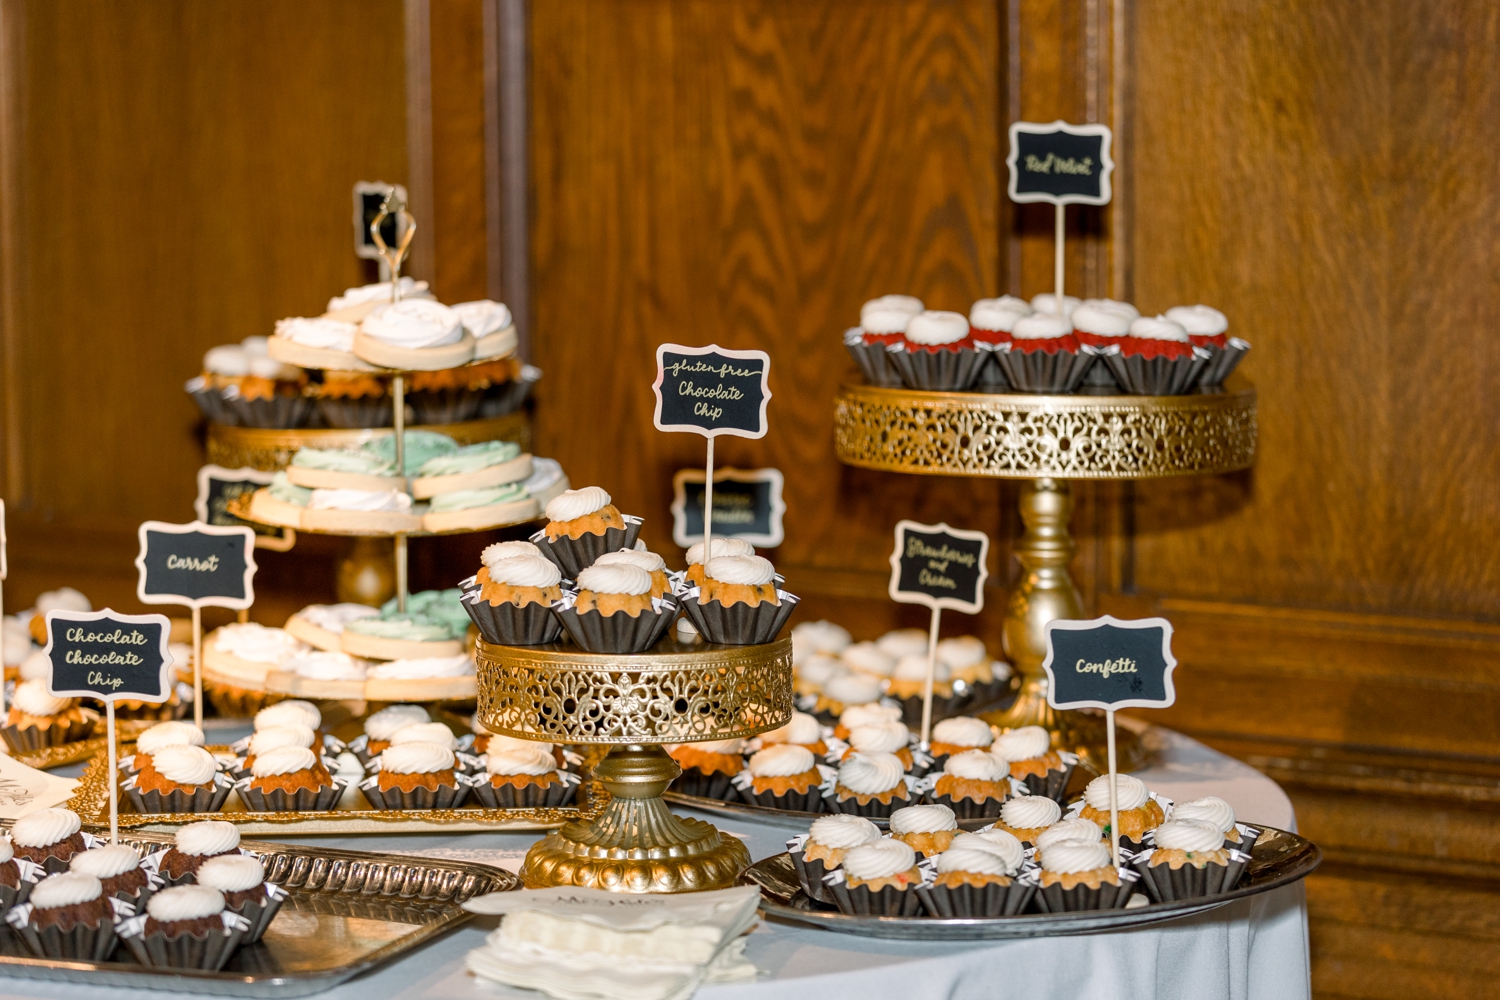 Nothing Bundt Cakes at The Cincinnati Club Wedding Reception